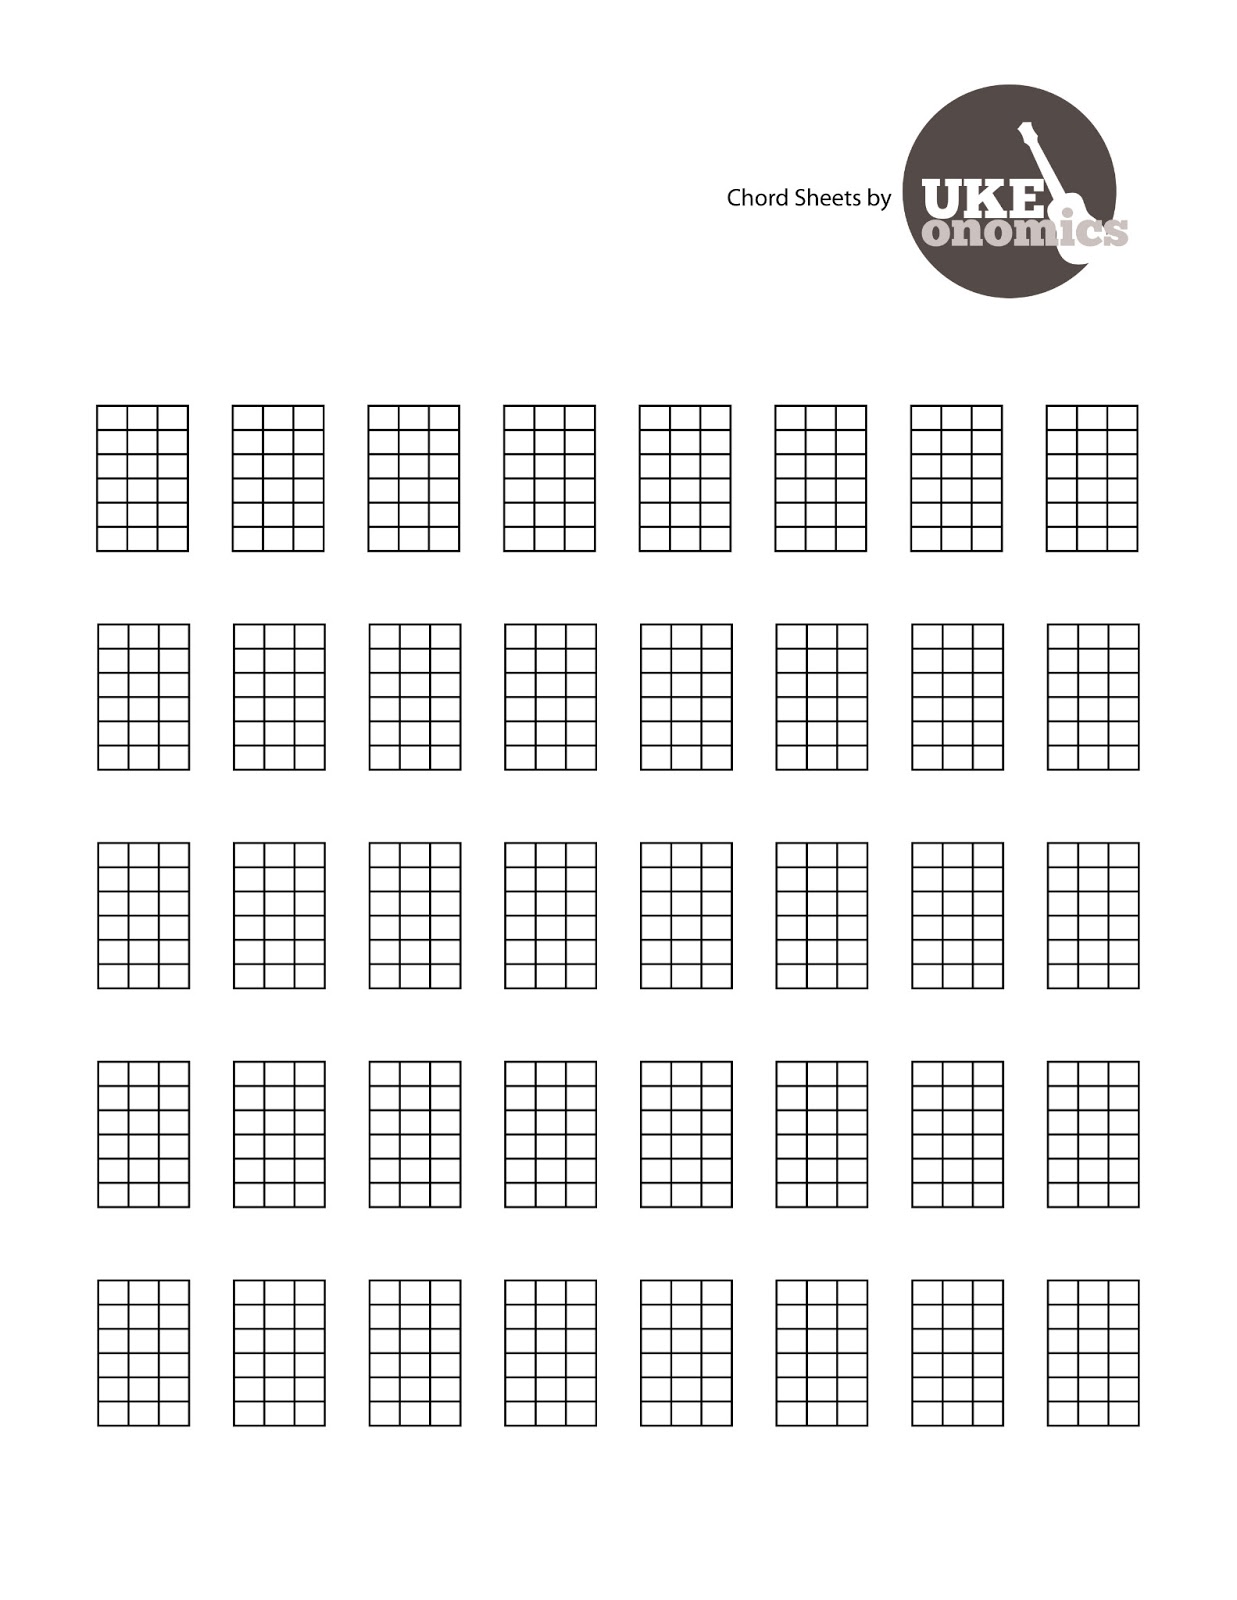 ukulele-chord-chart-printable-printable-world-holiday